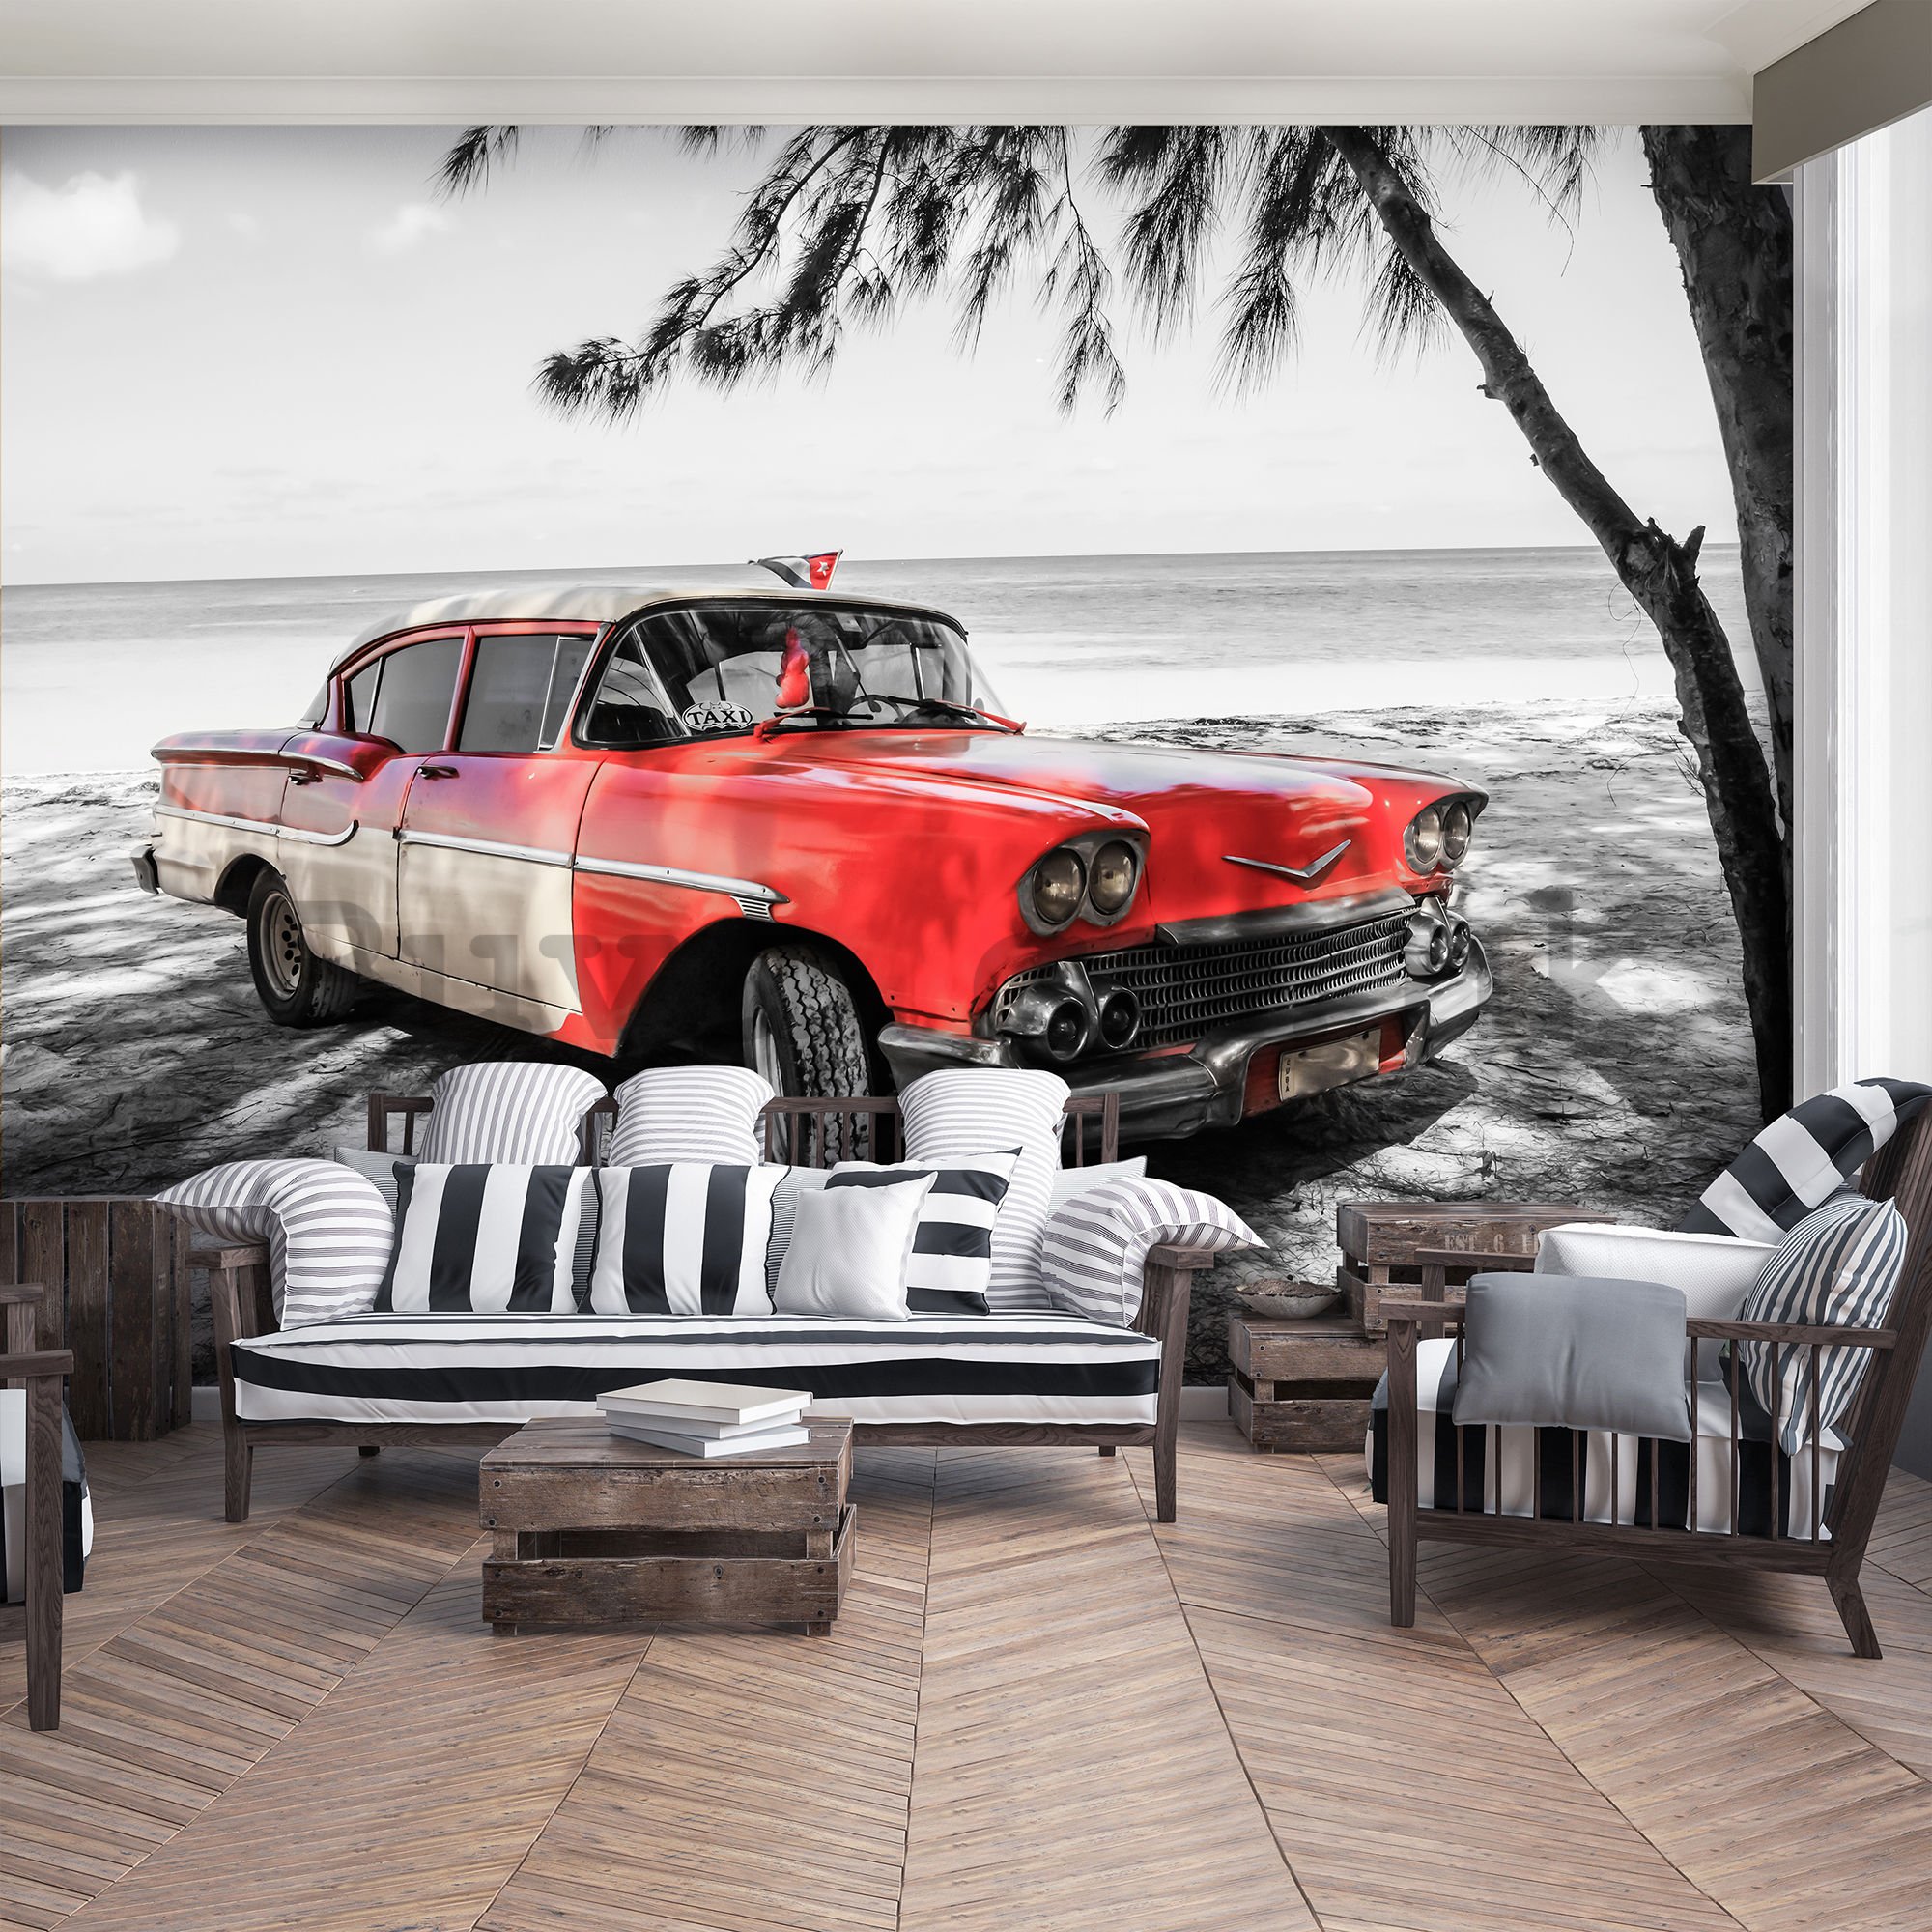 Wall mural: Cuba red car by the sea - 254x368 cm